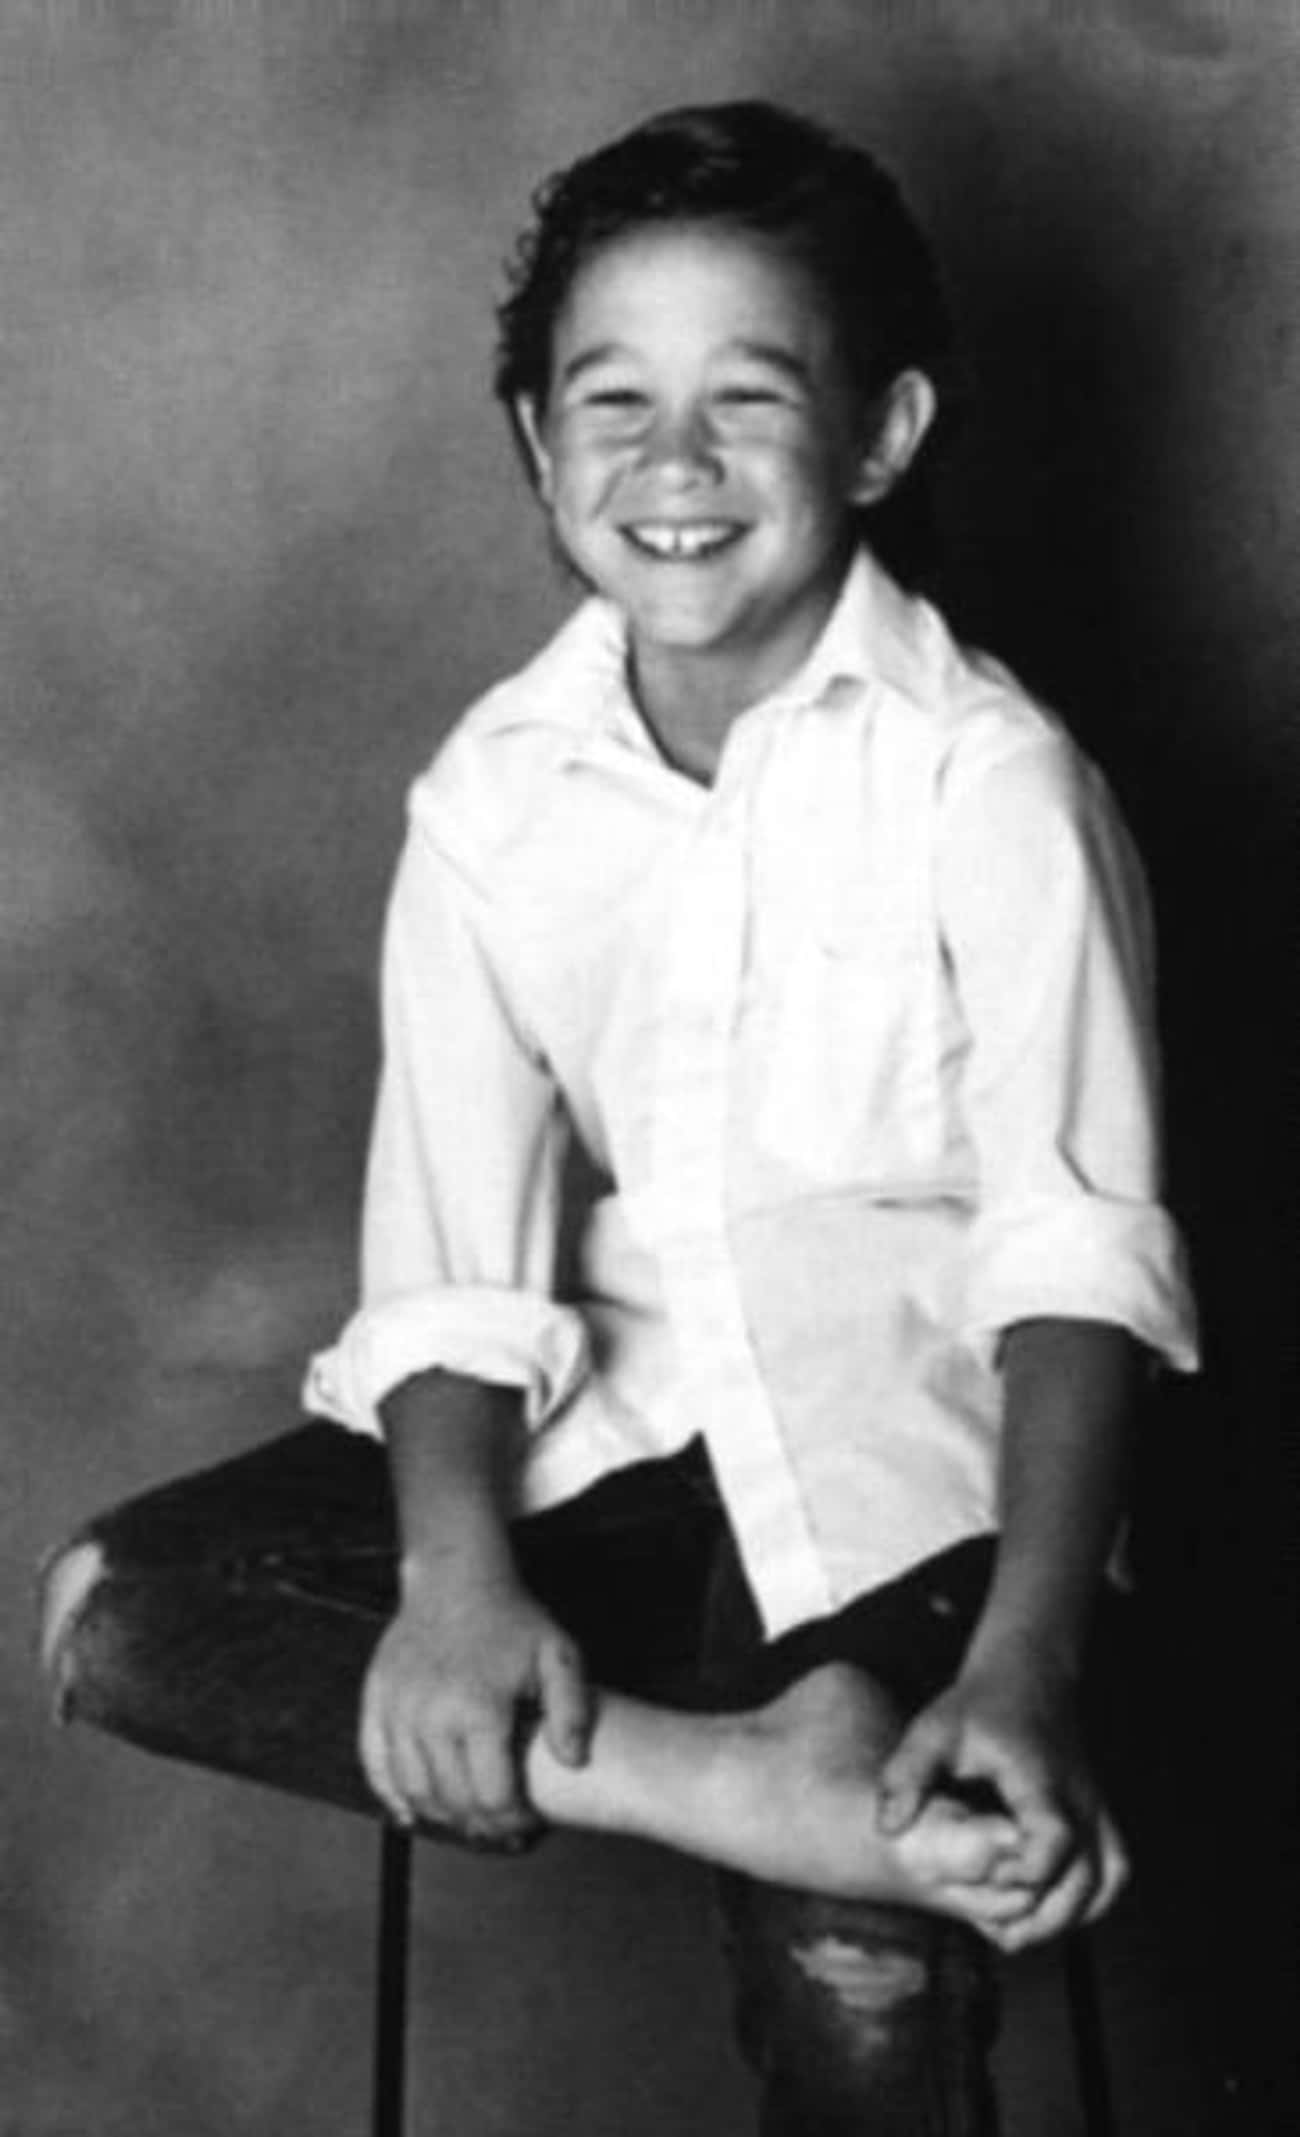 Young Joseph Gordon-Levitt in White Buttondown and Black Jeans